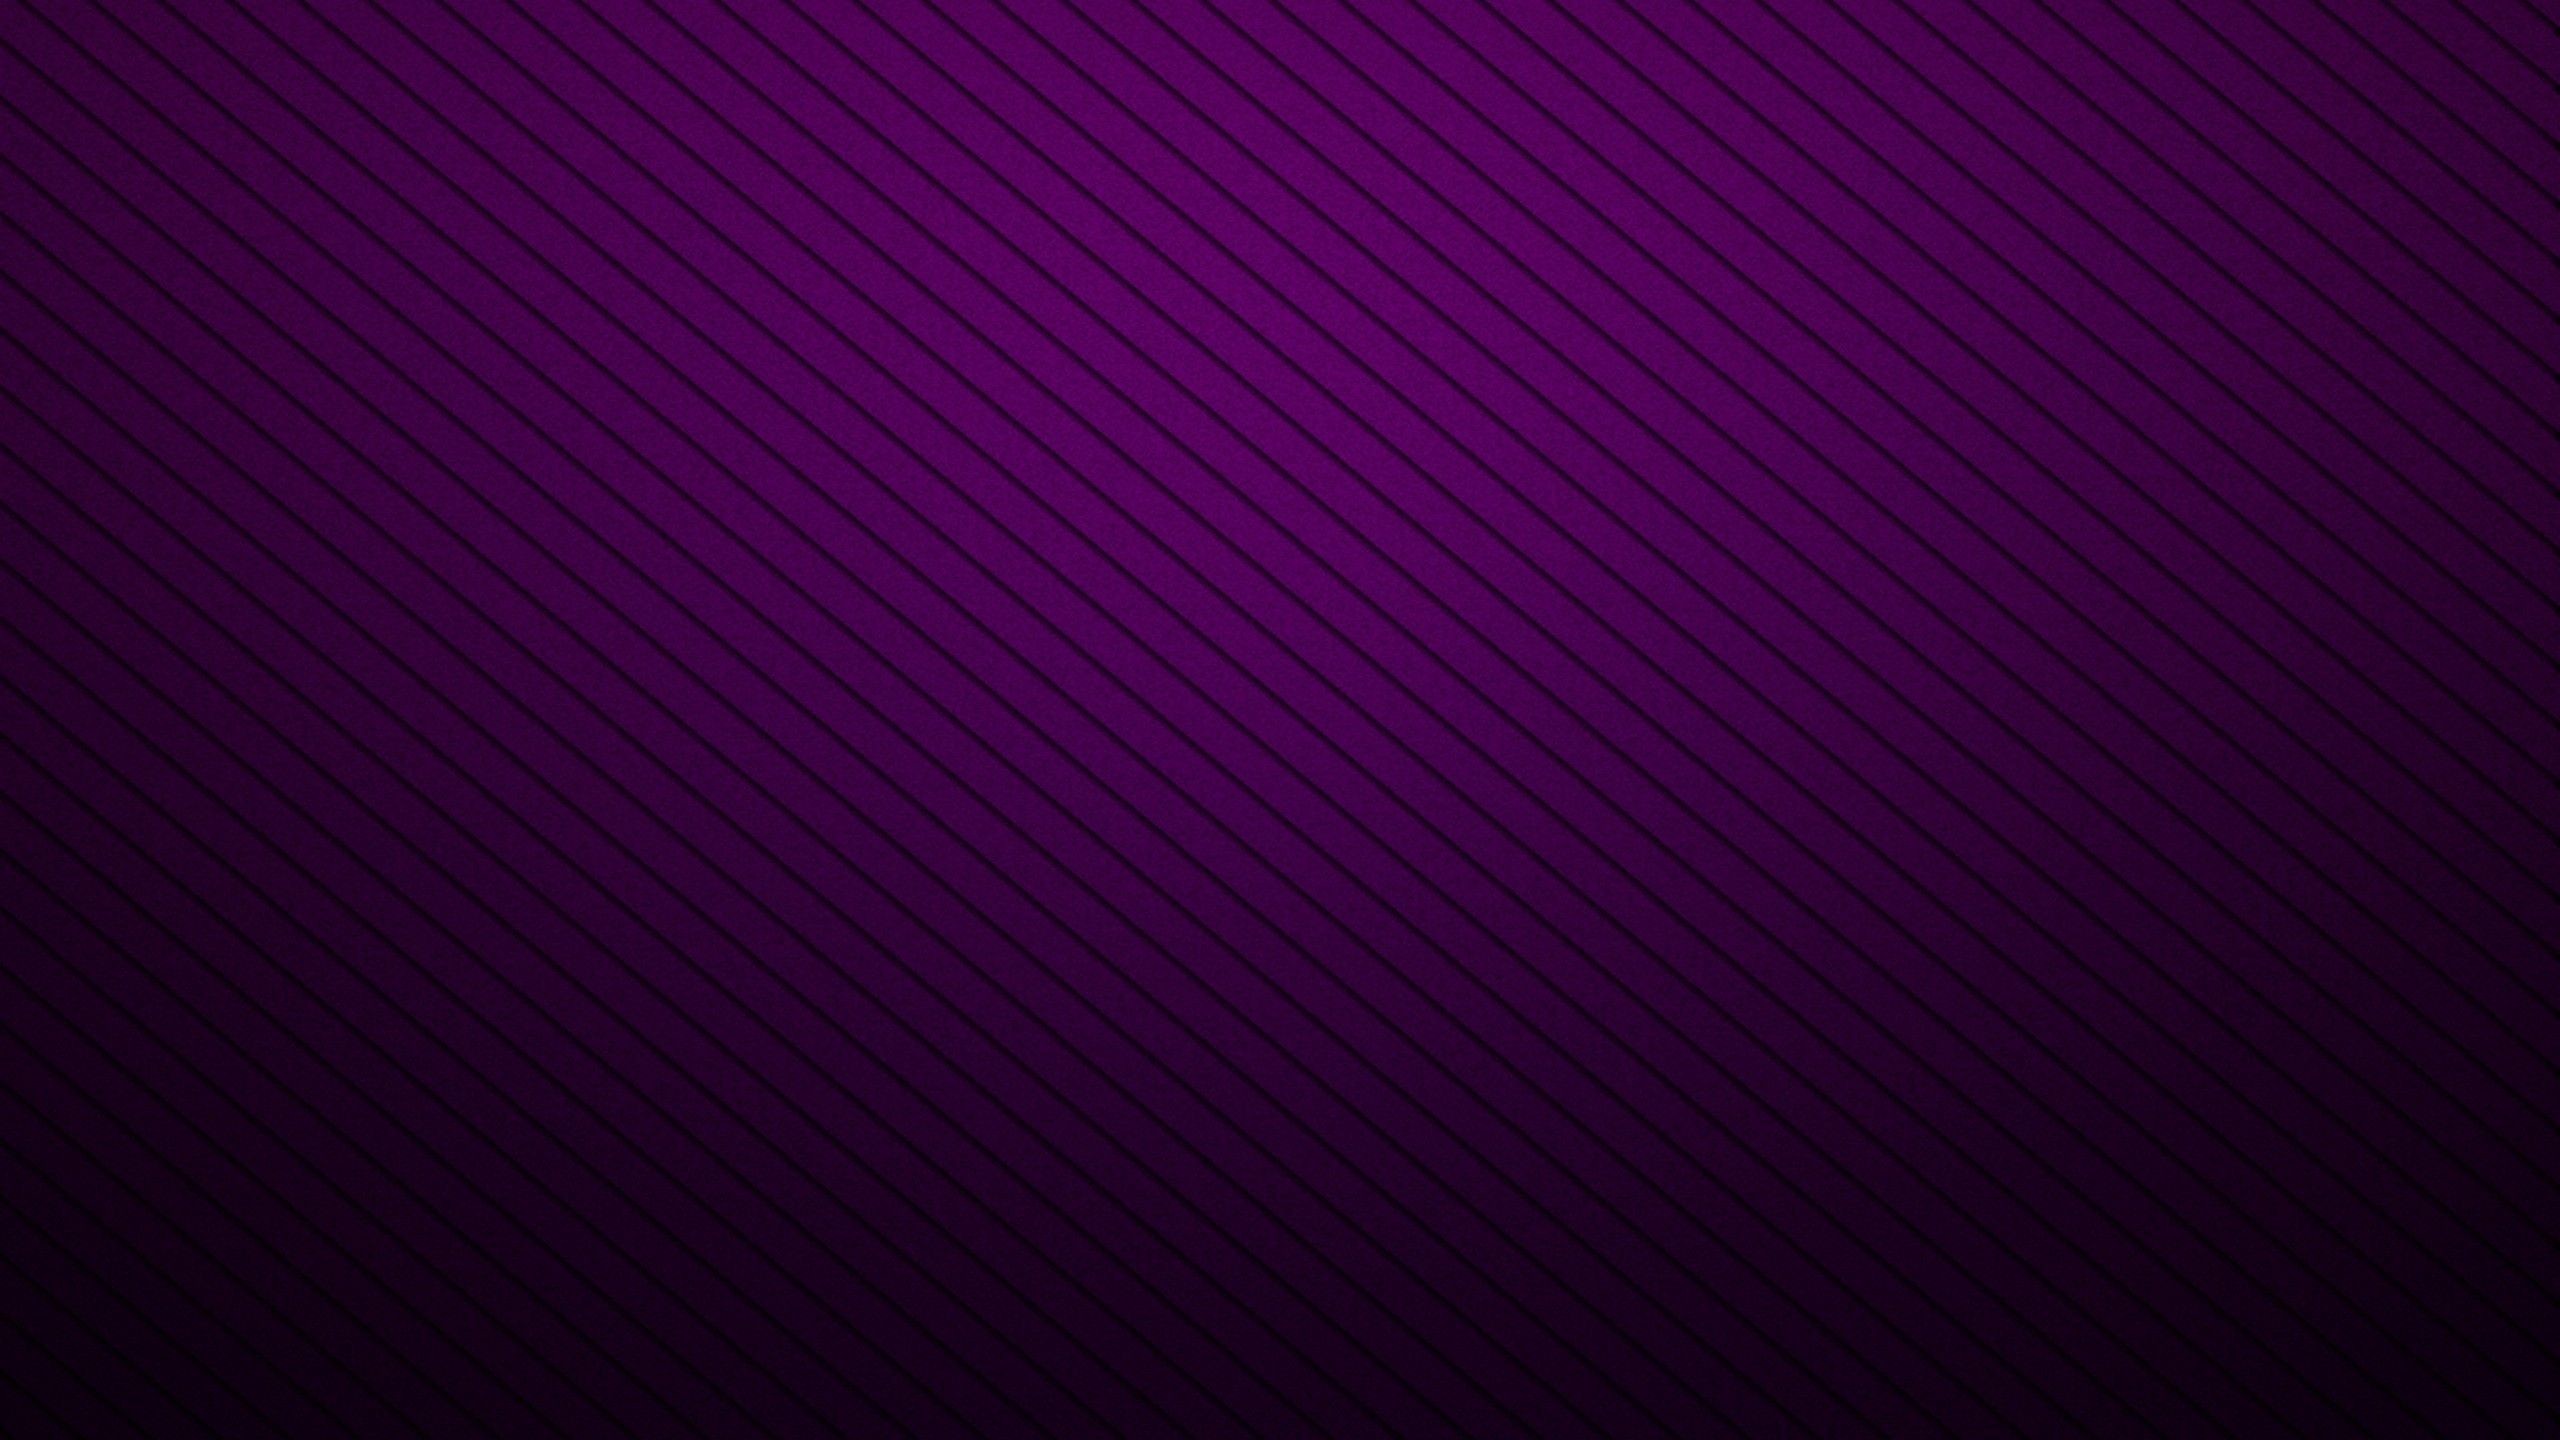 Simple Stylish Dark Purple Gradient Background Simple Fashion Deep  Purple Background Image And Wallpaper for Free Download